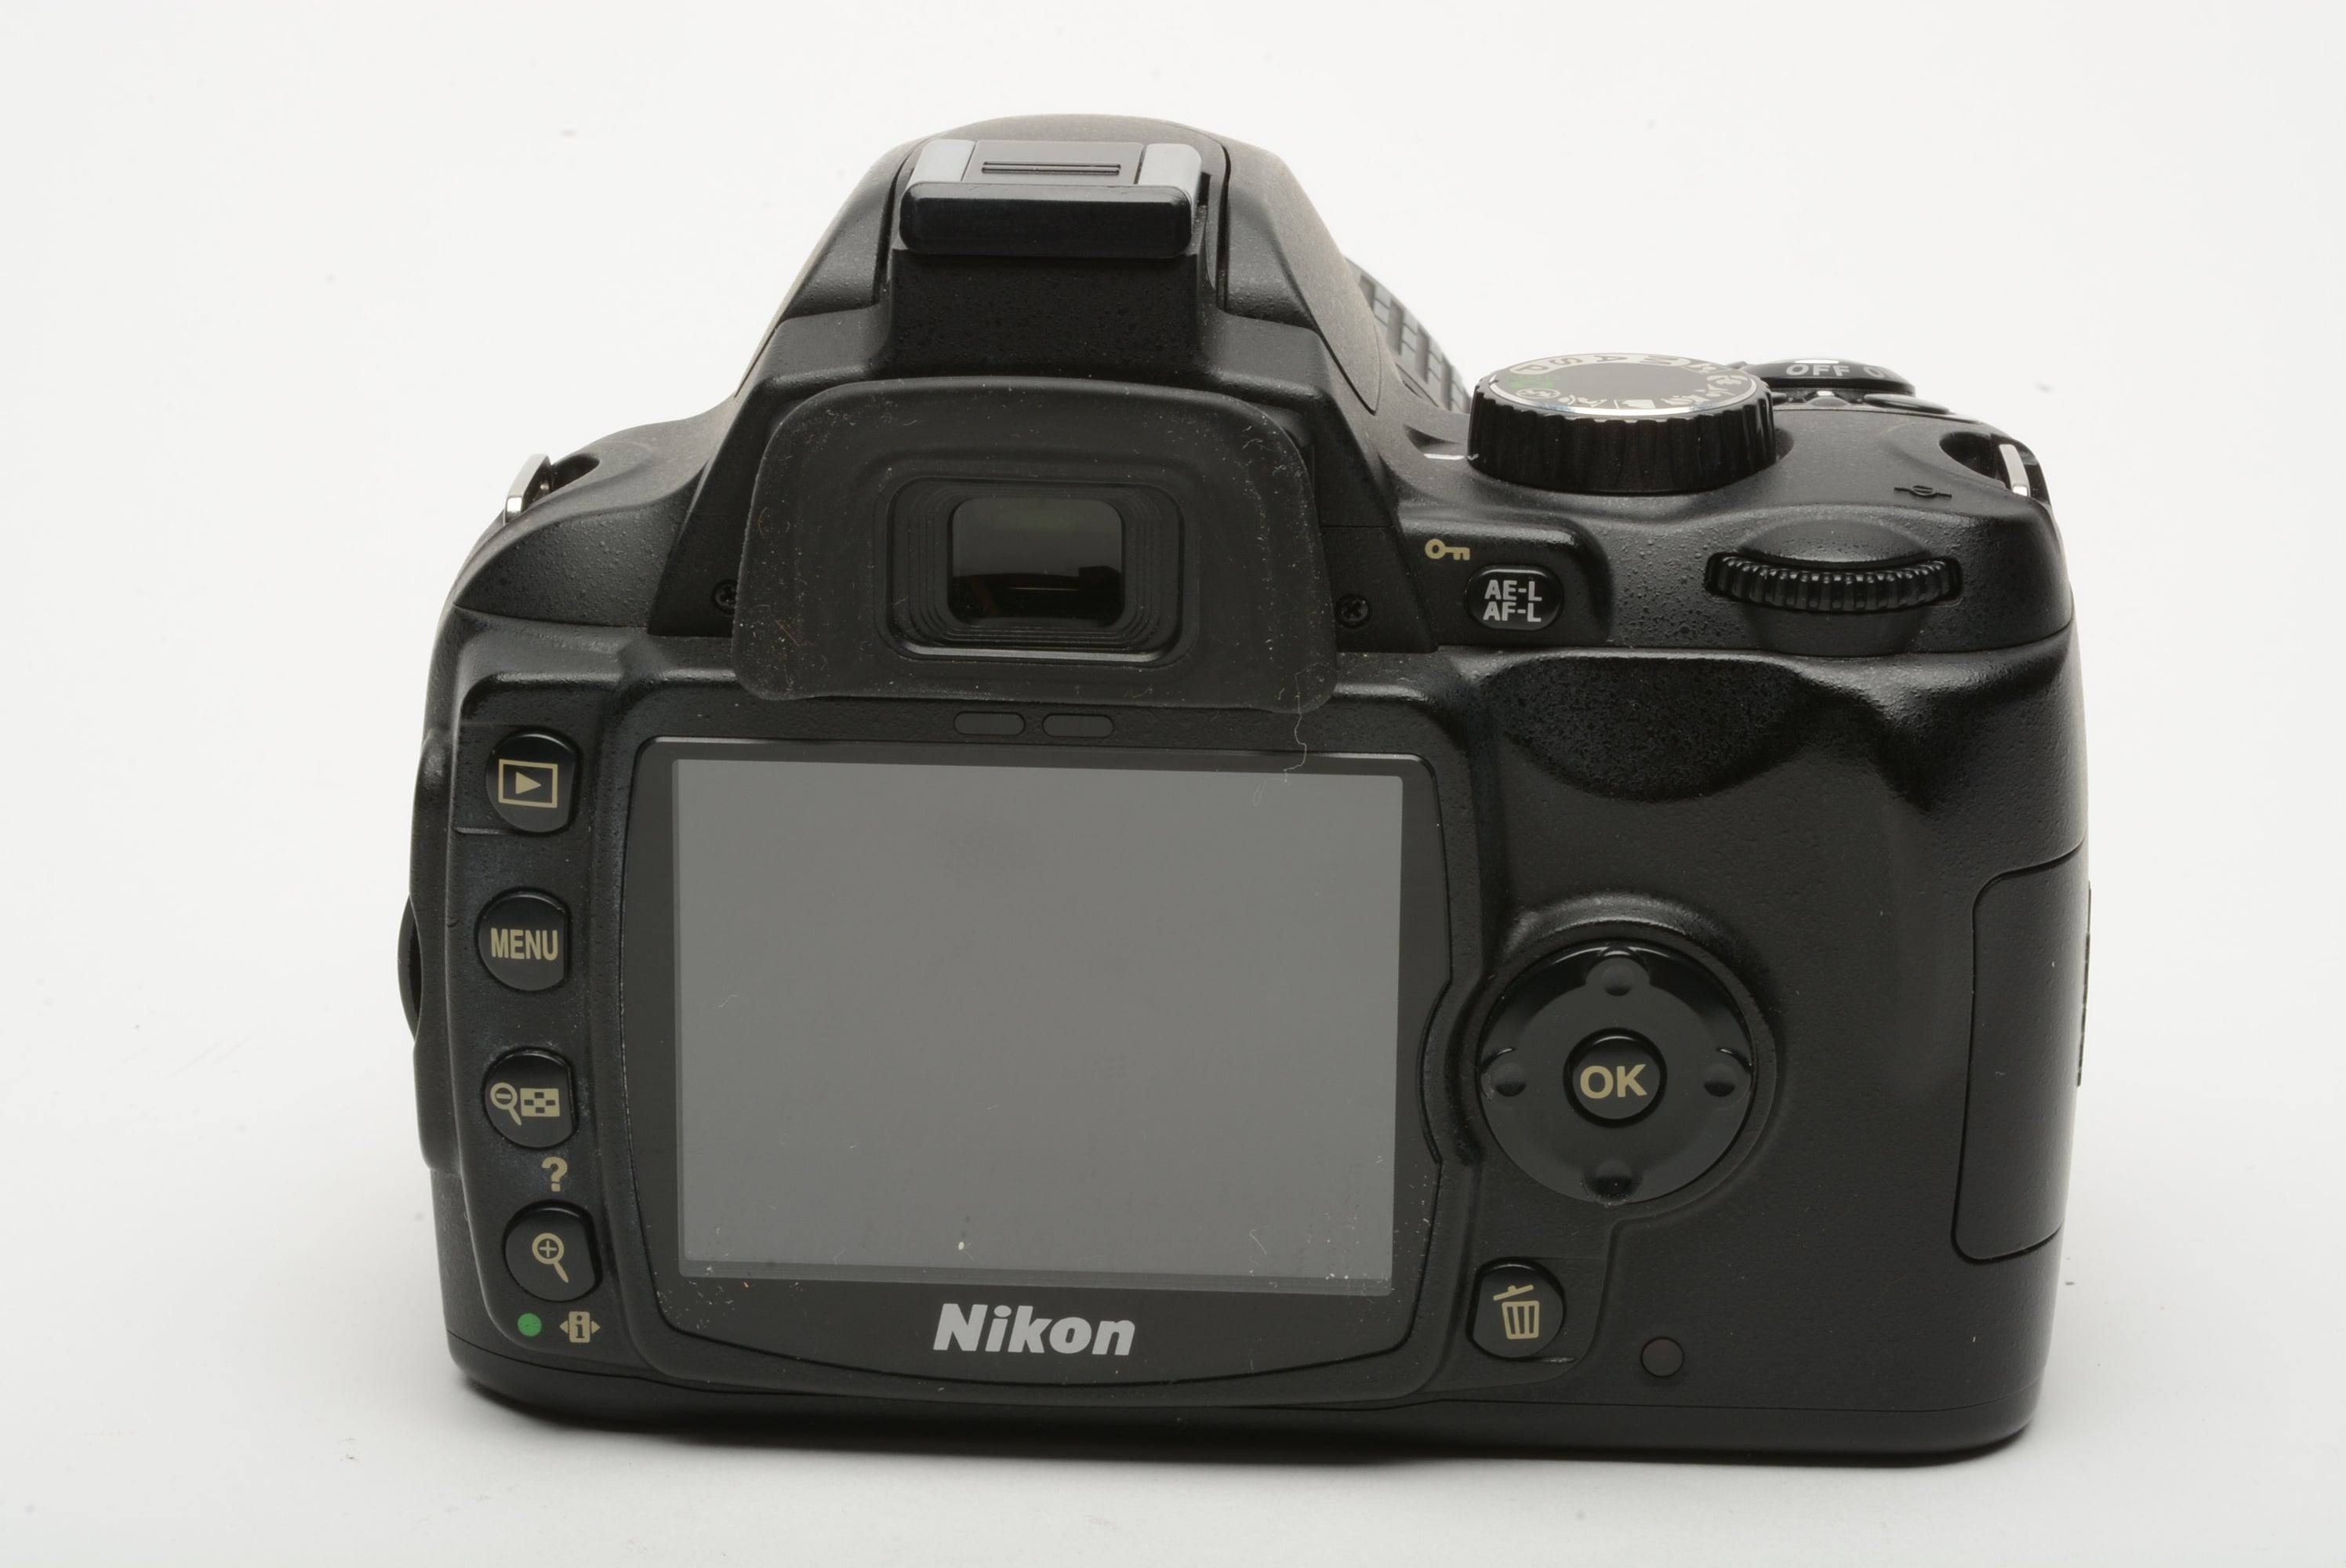 Nikon D60 DSLR body w/18-55mm f3.5-5.6G DX, batt+charger+2GB SD+ 